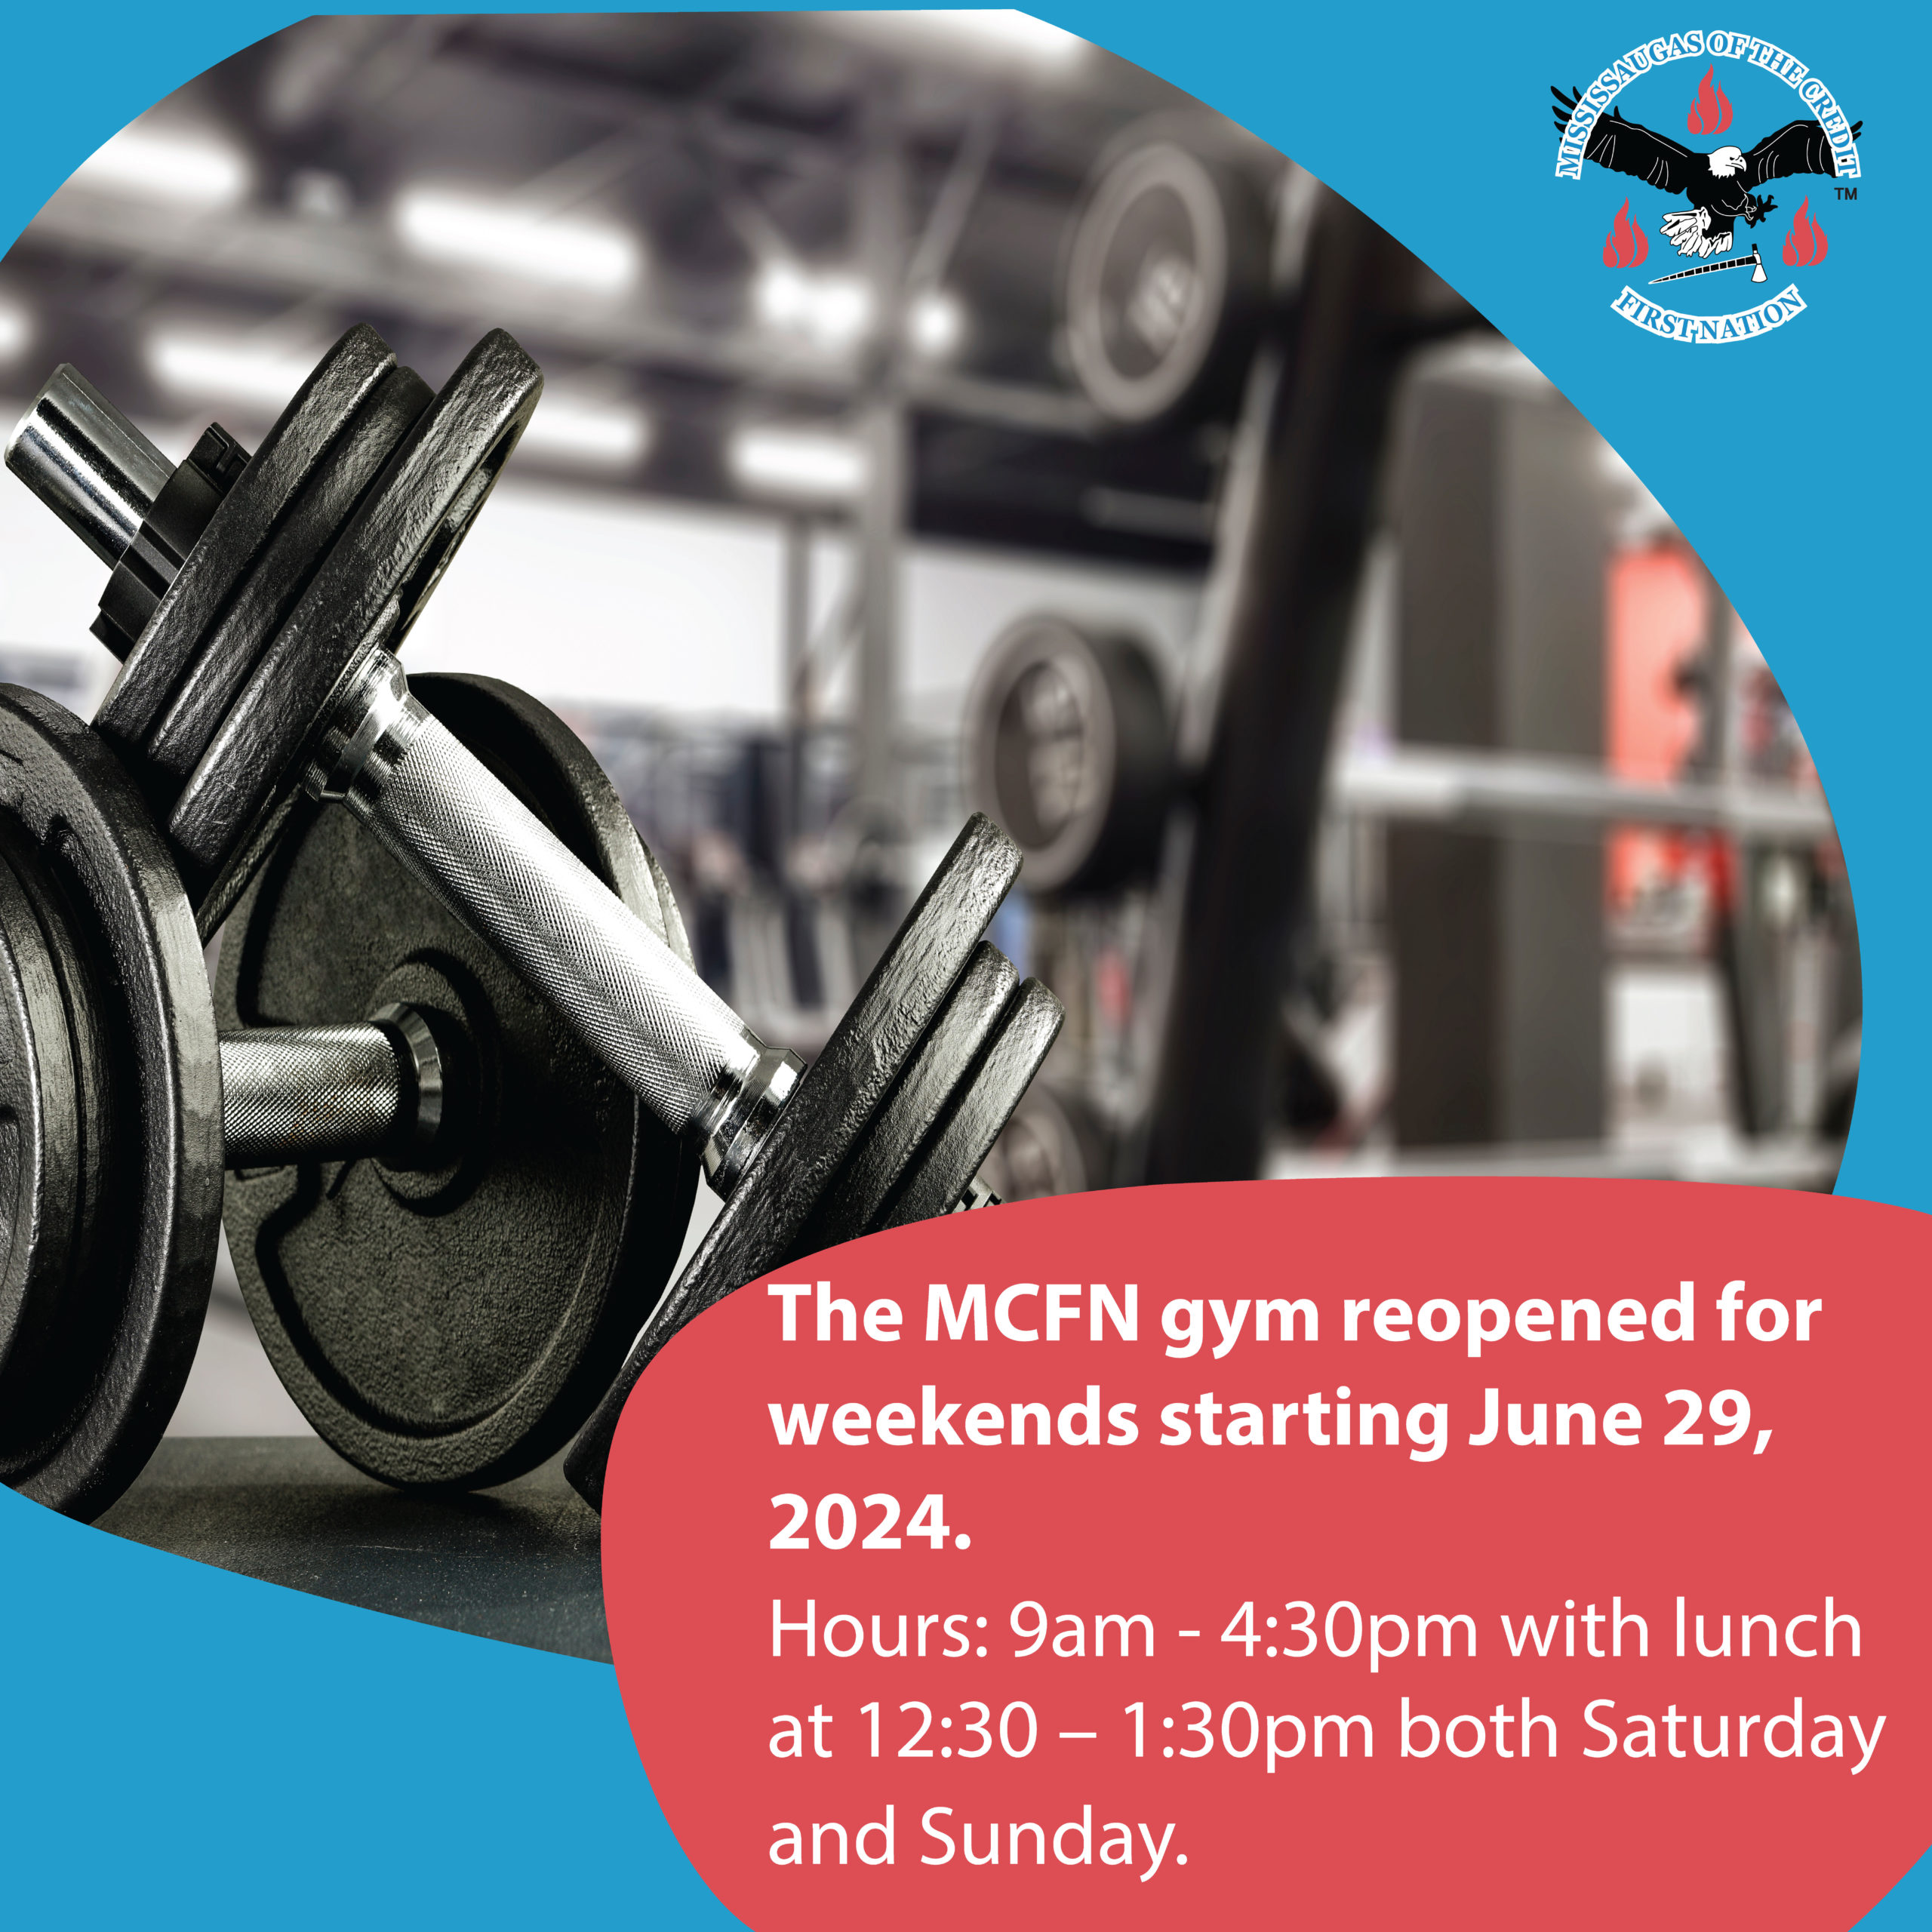 MCFN gym is open weekends!